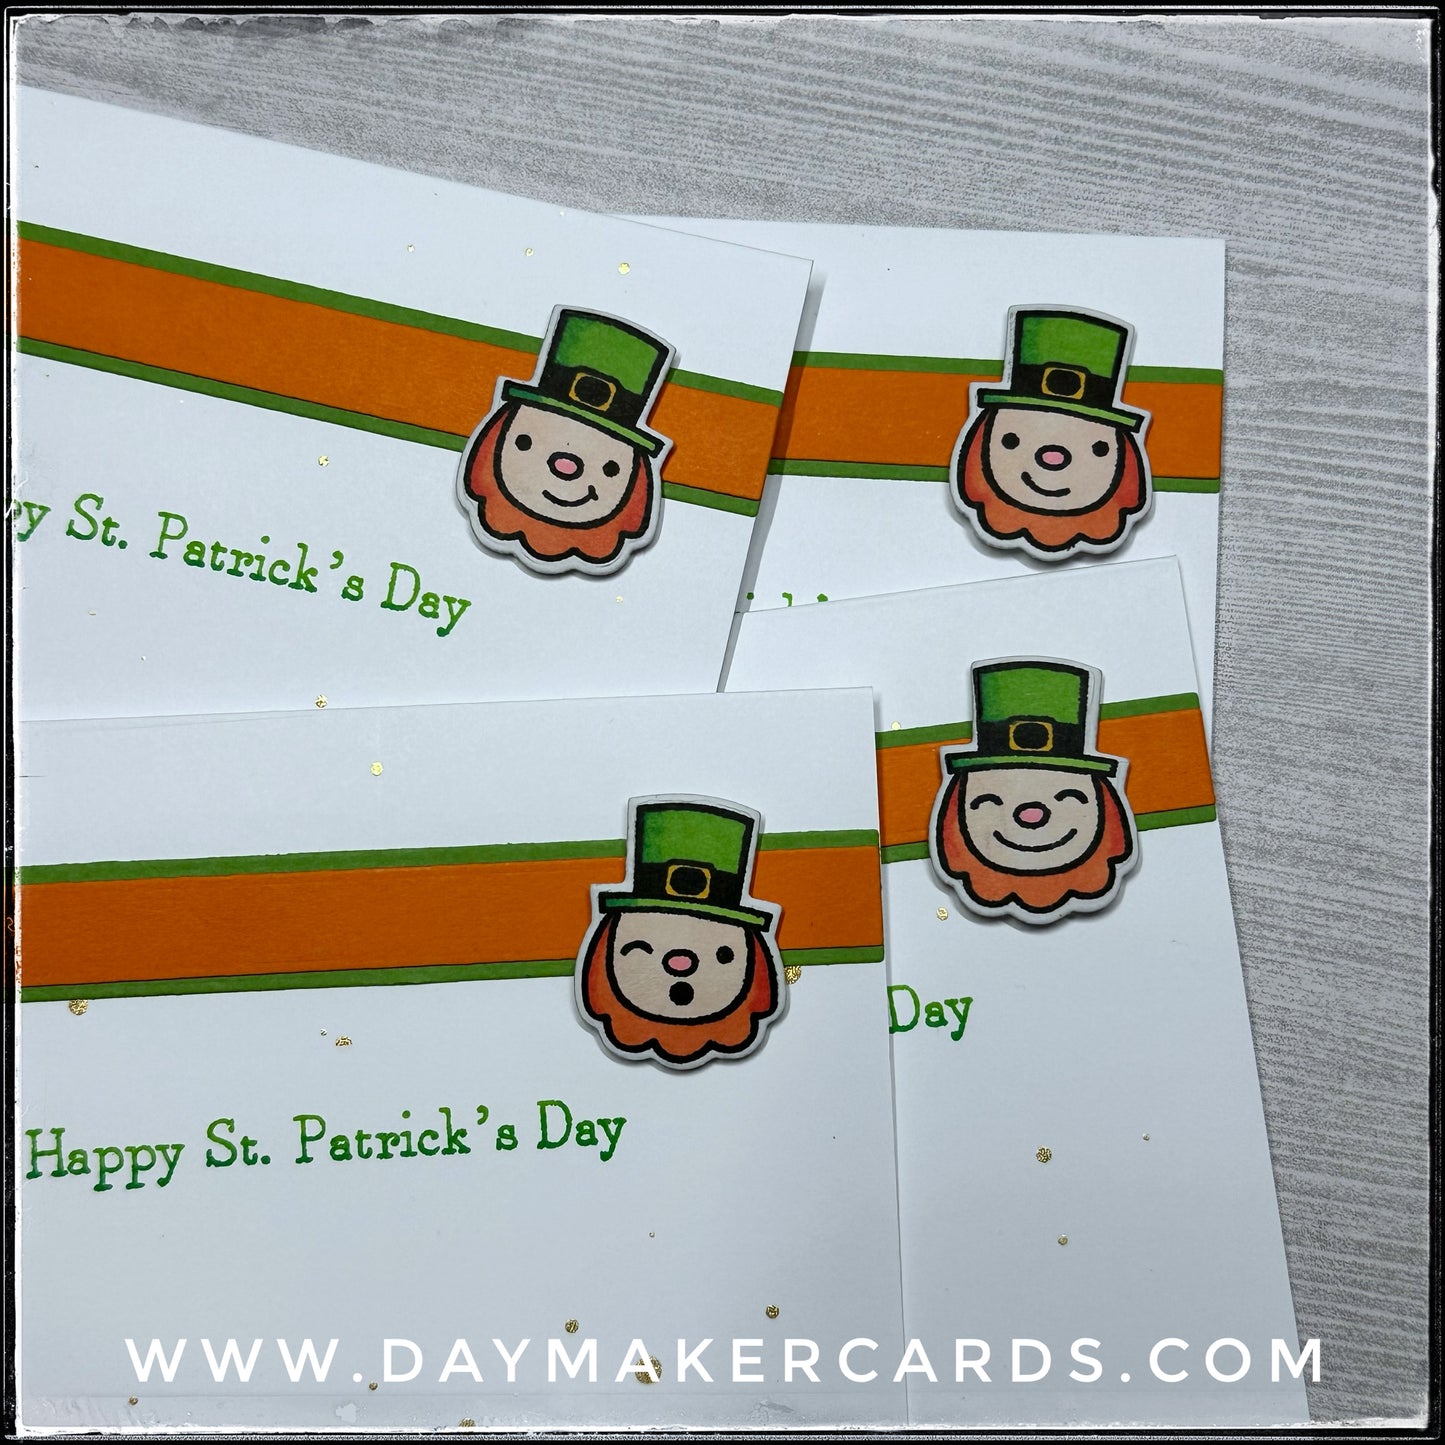 Happy St. Patrick's Day Handmade Card